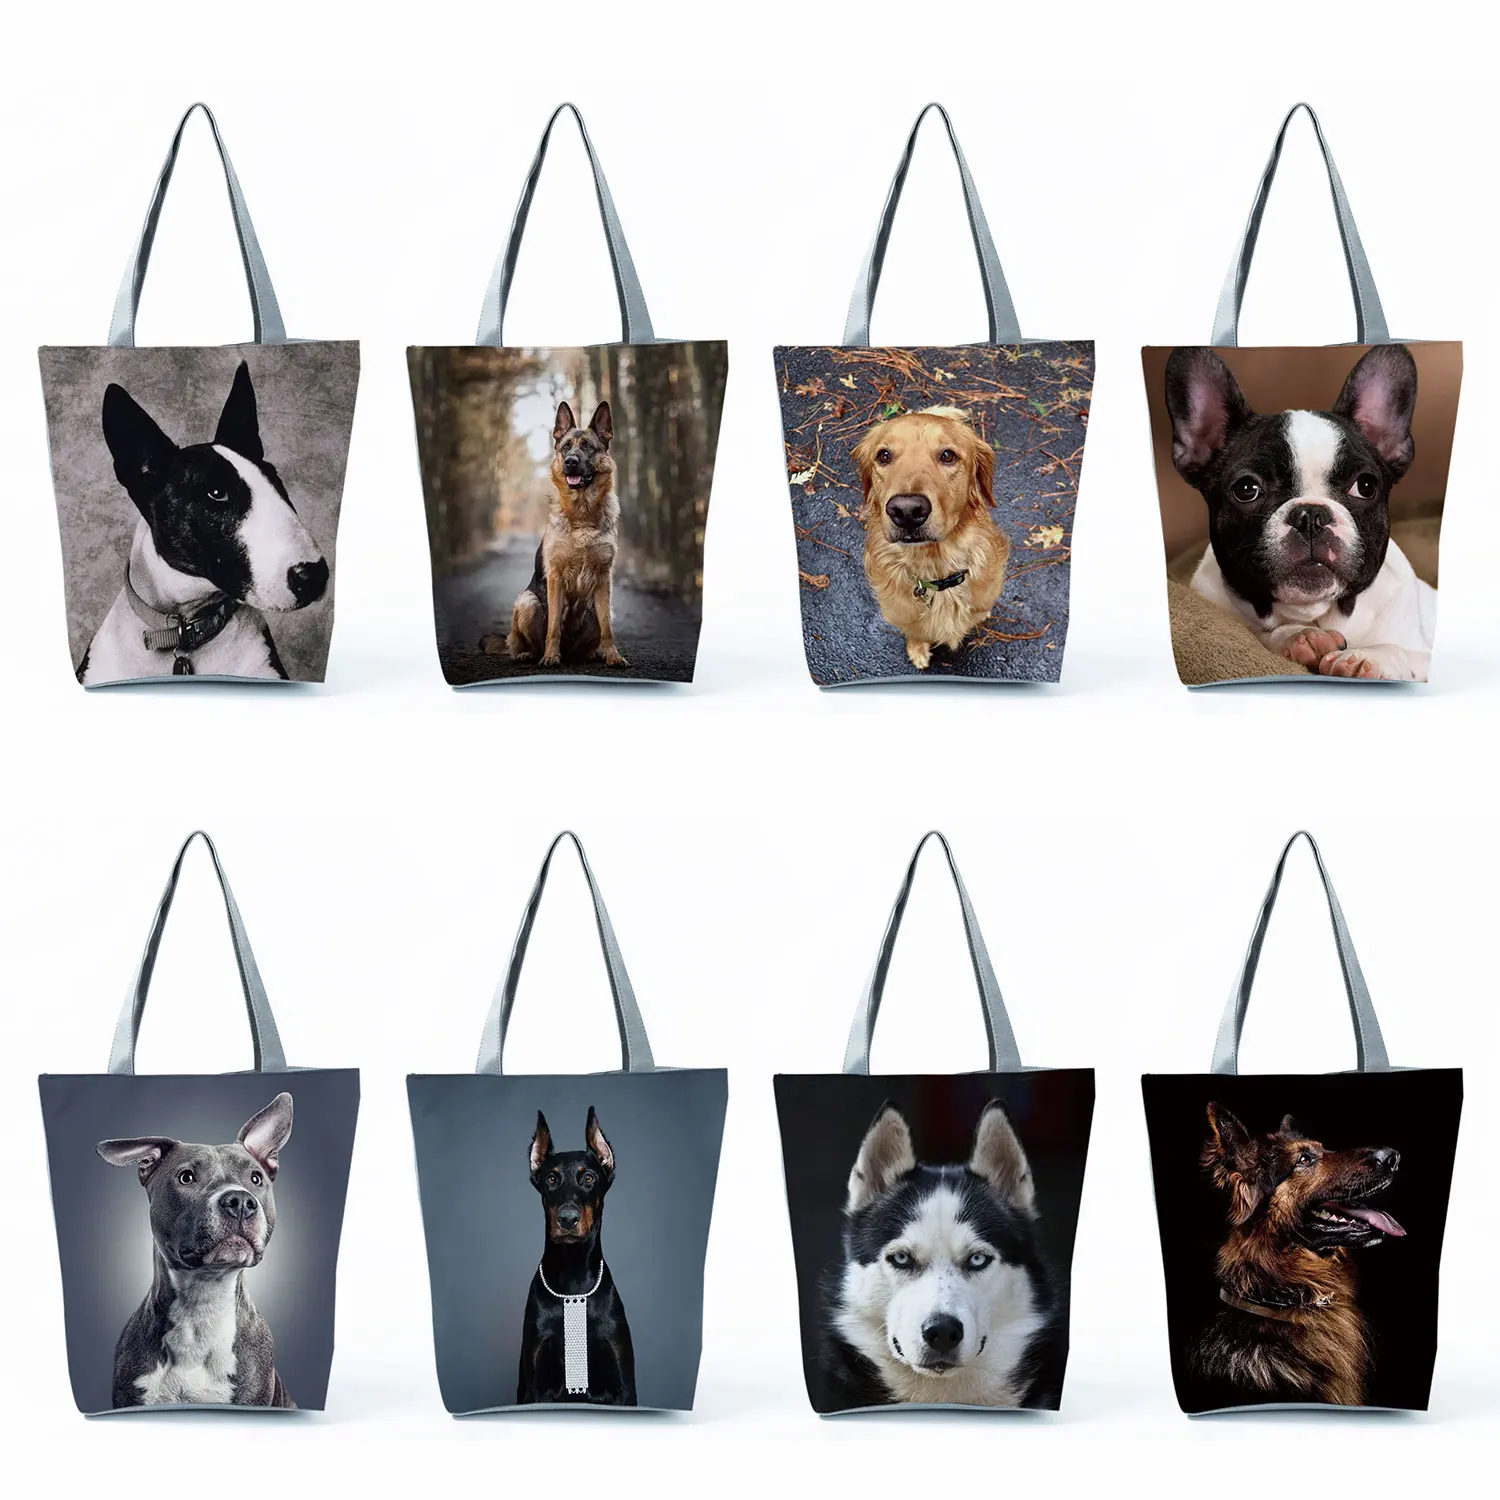 

Large Capacity Shopping Bag Female Dog Print Handbags For Women Travel Beach Shoulder Bags Animal Fashion Tote bags Customizable